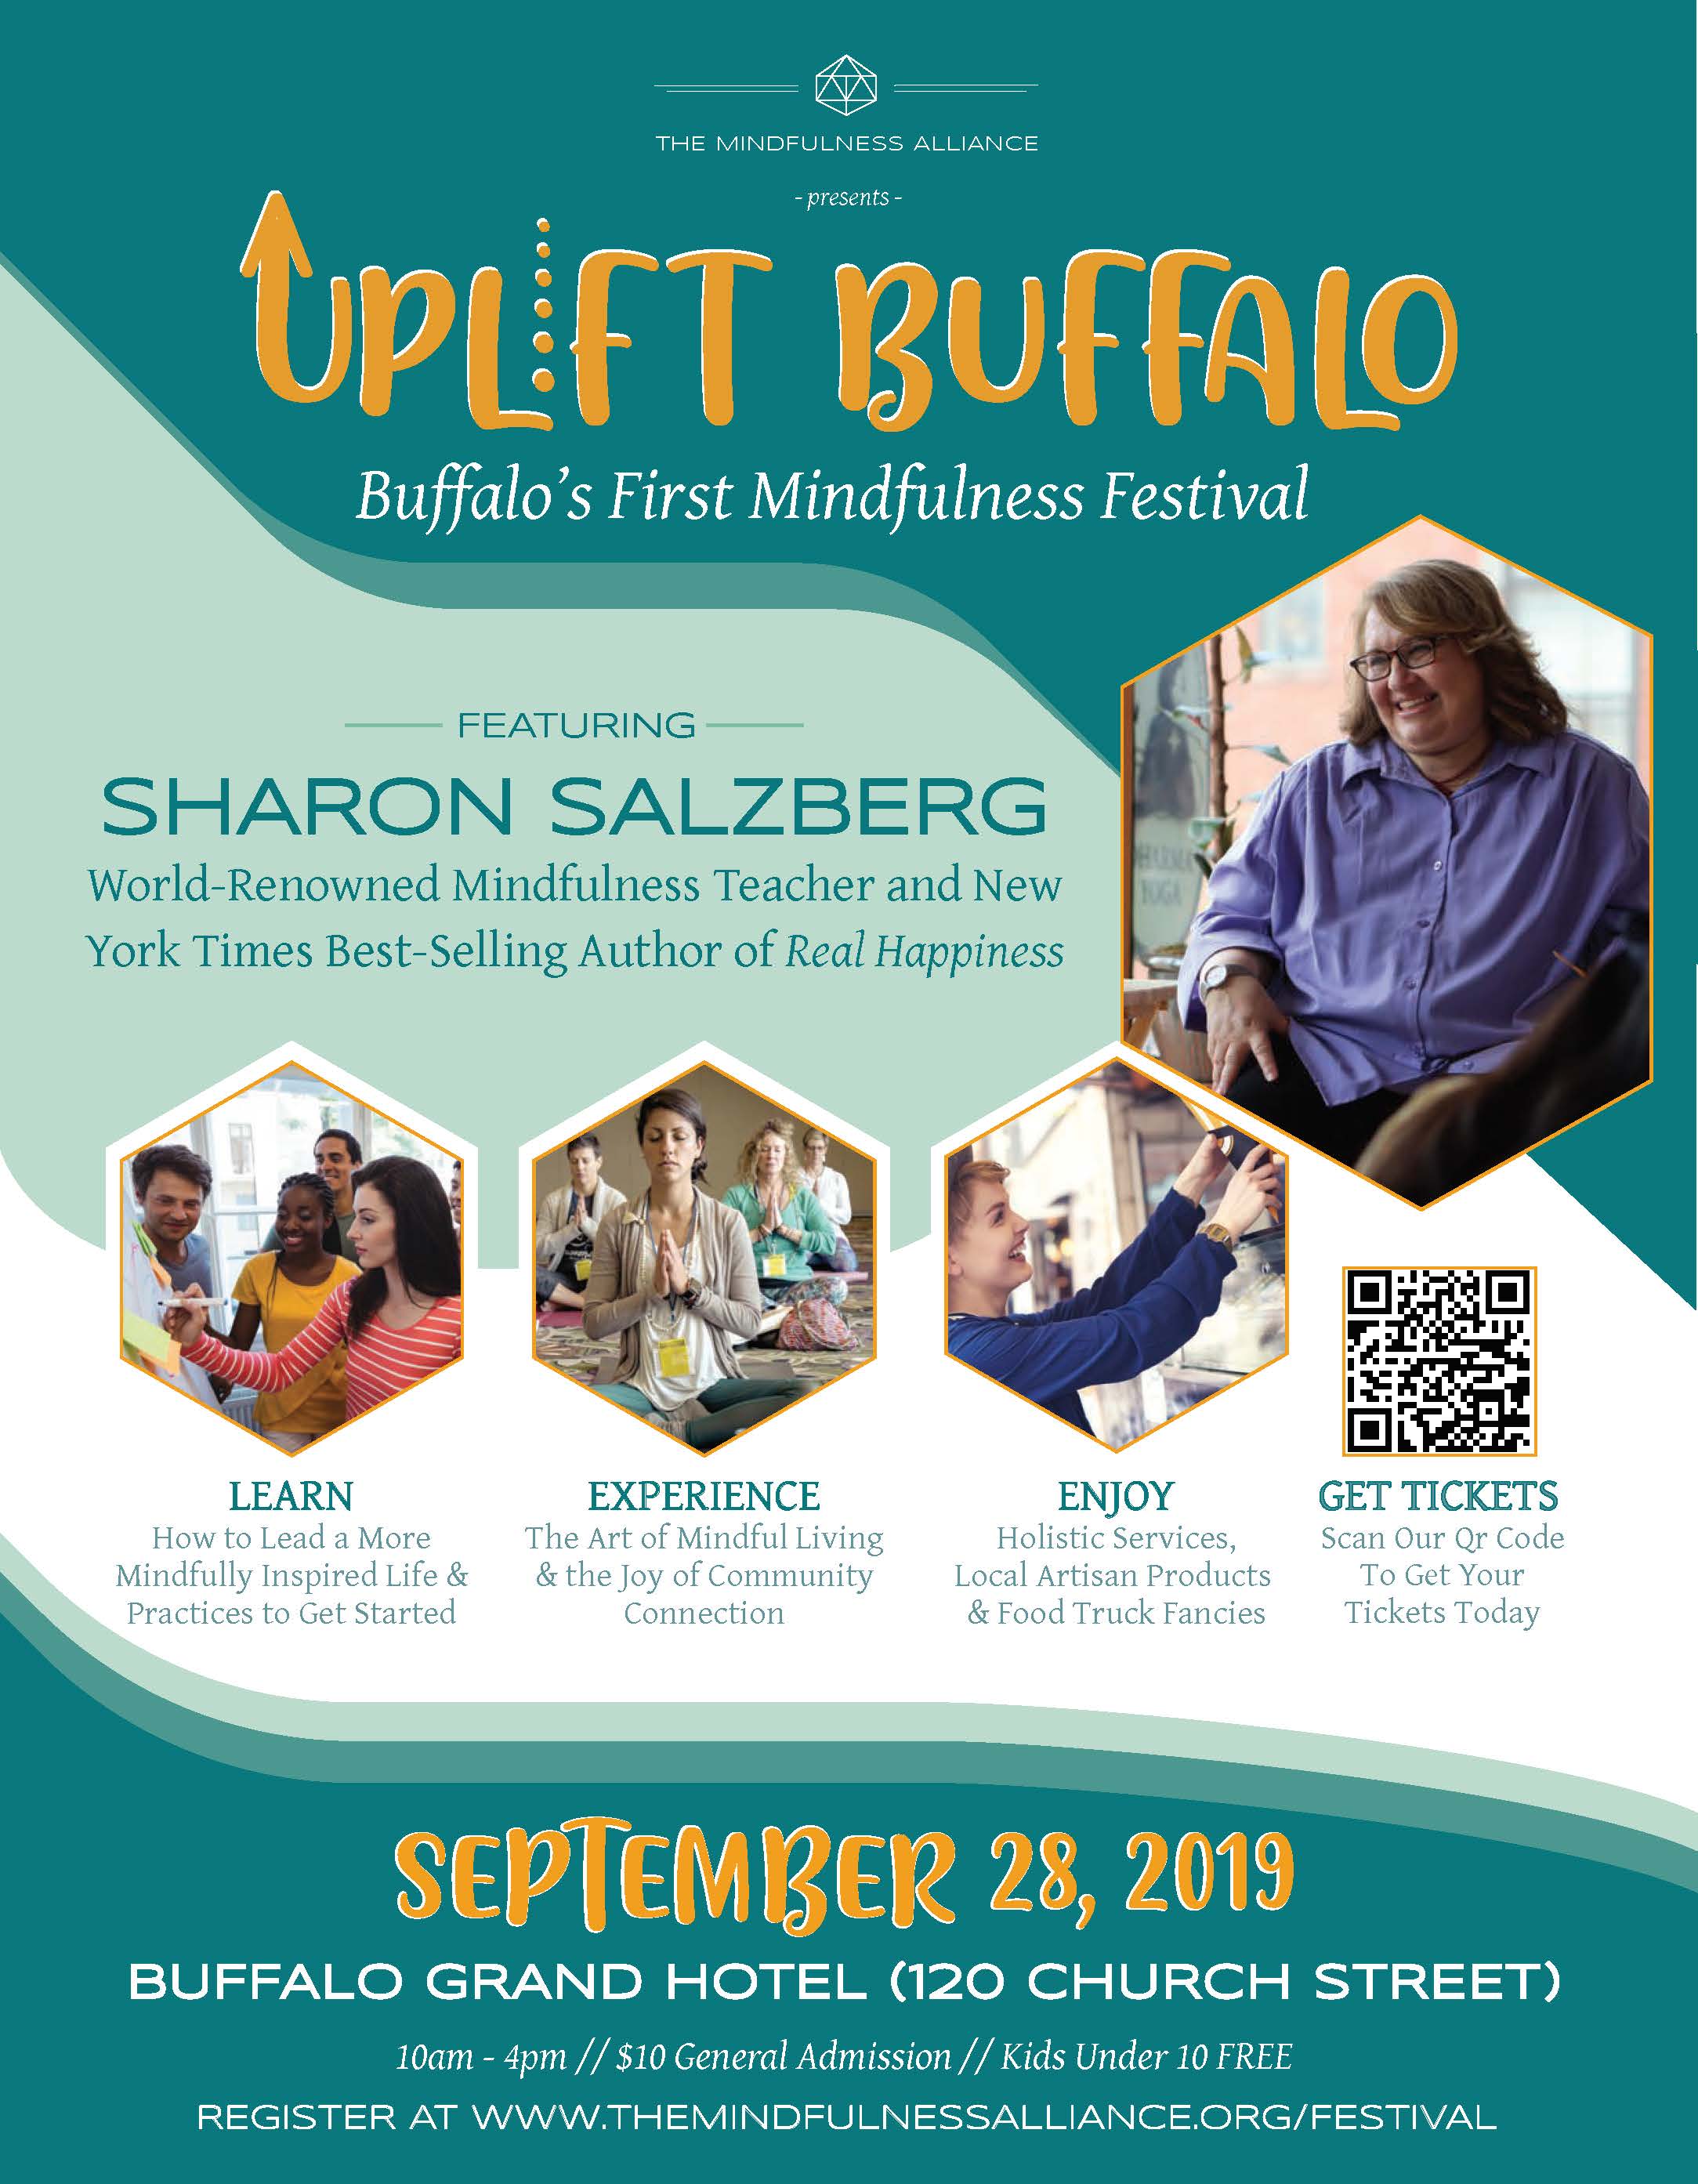 UpLift Buffalo is Region’s First Mindfulness Festival